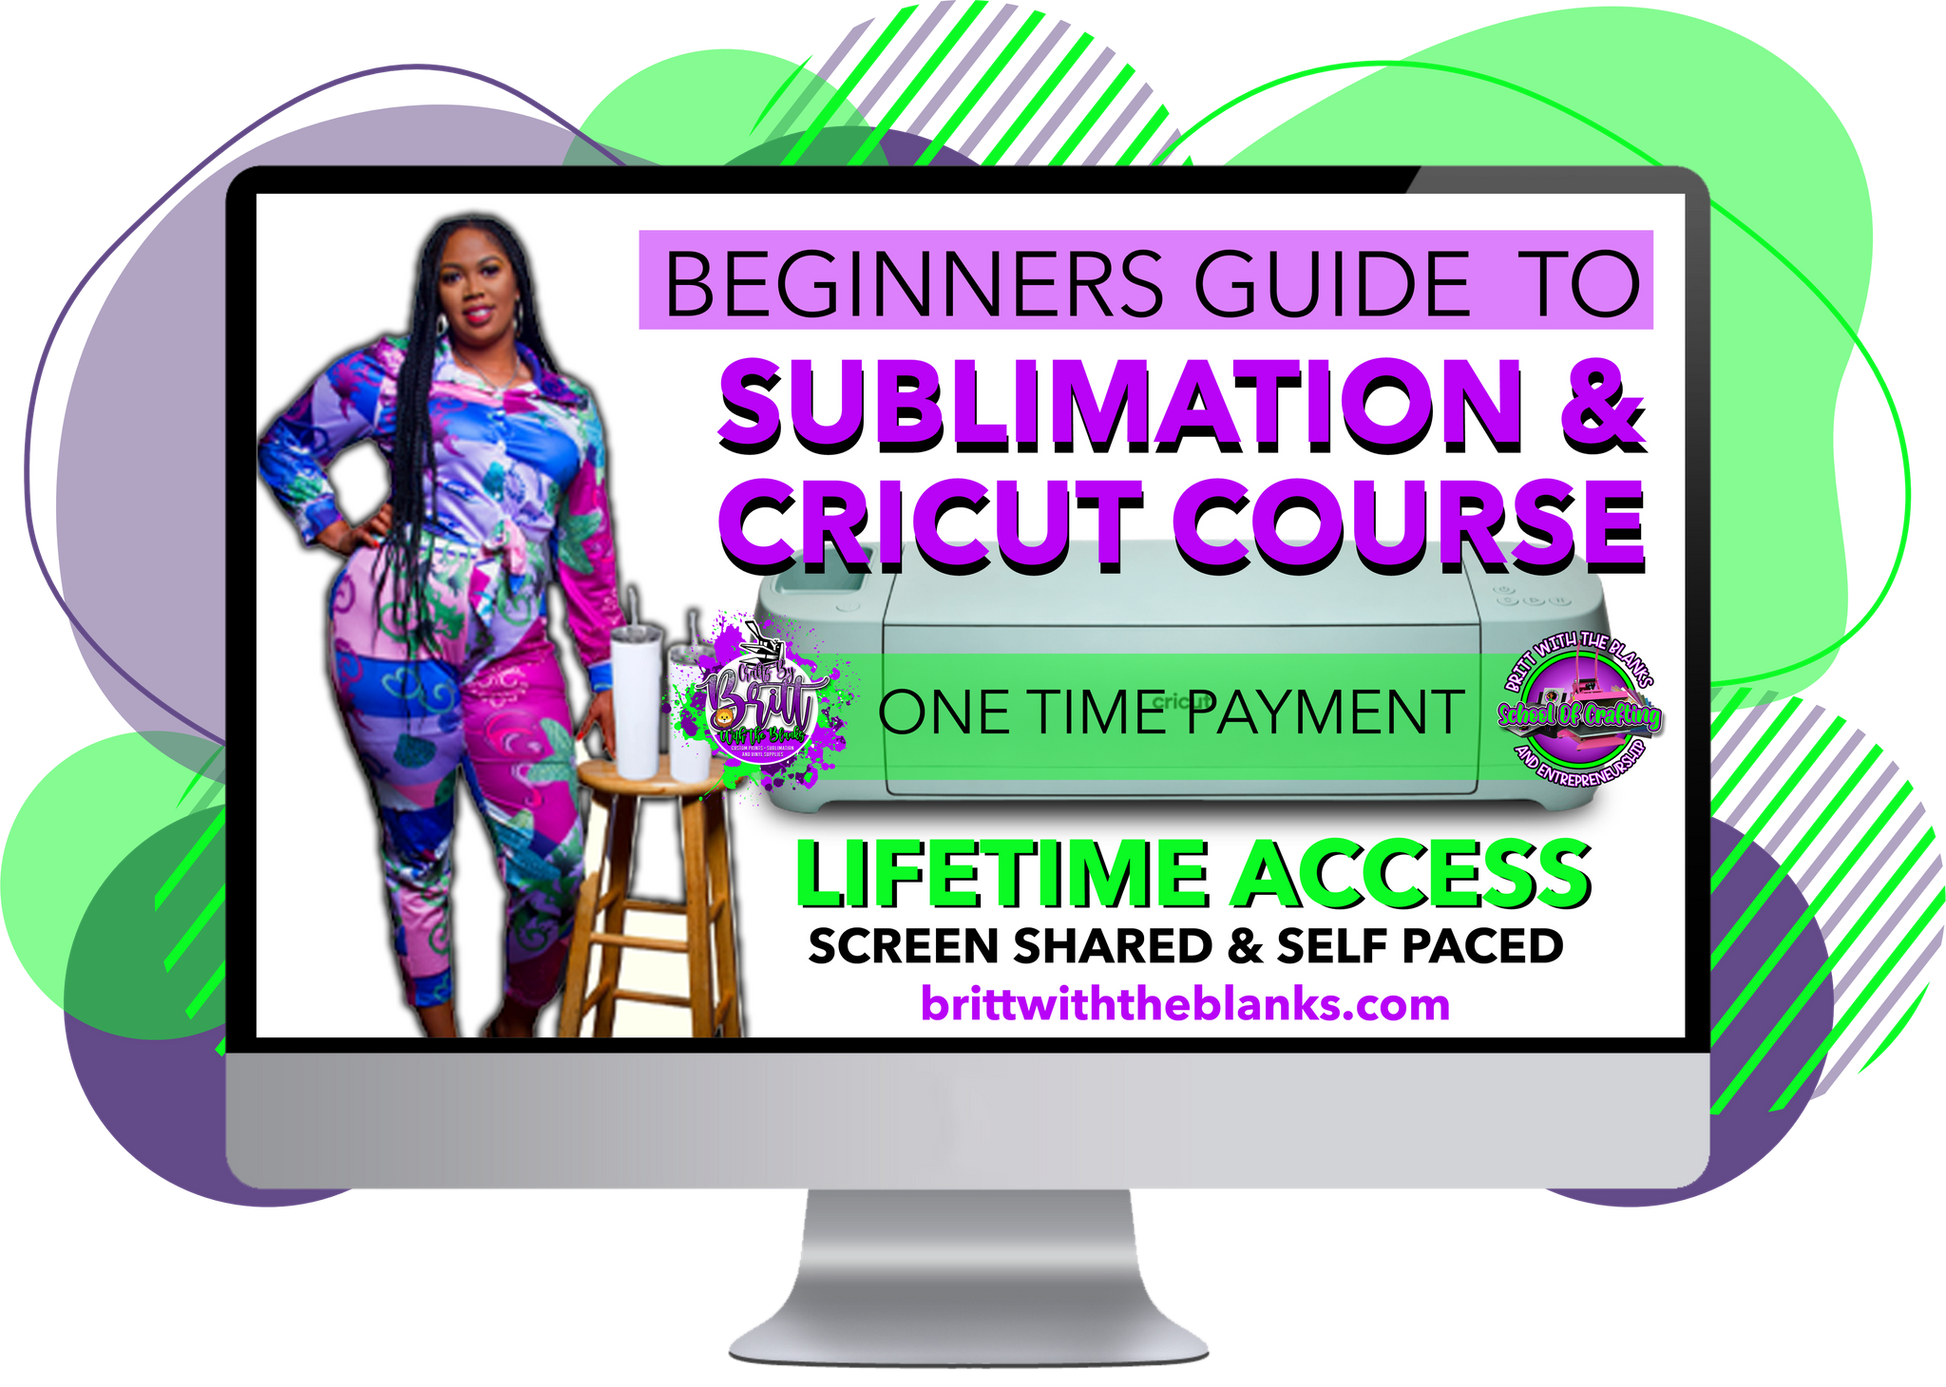 Sublimation Beginner Guide – Kim & Garrett Make It!